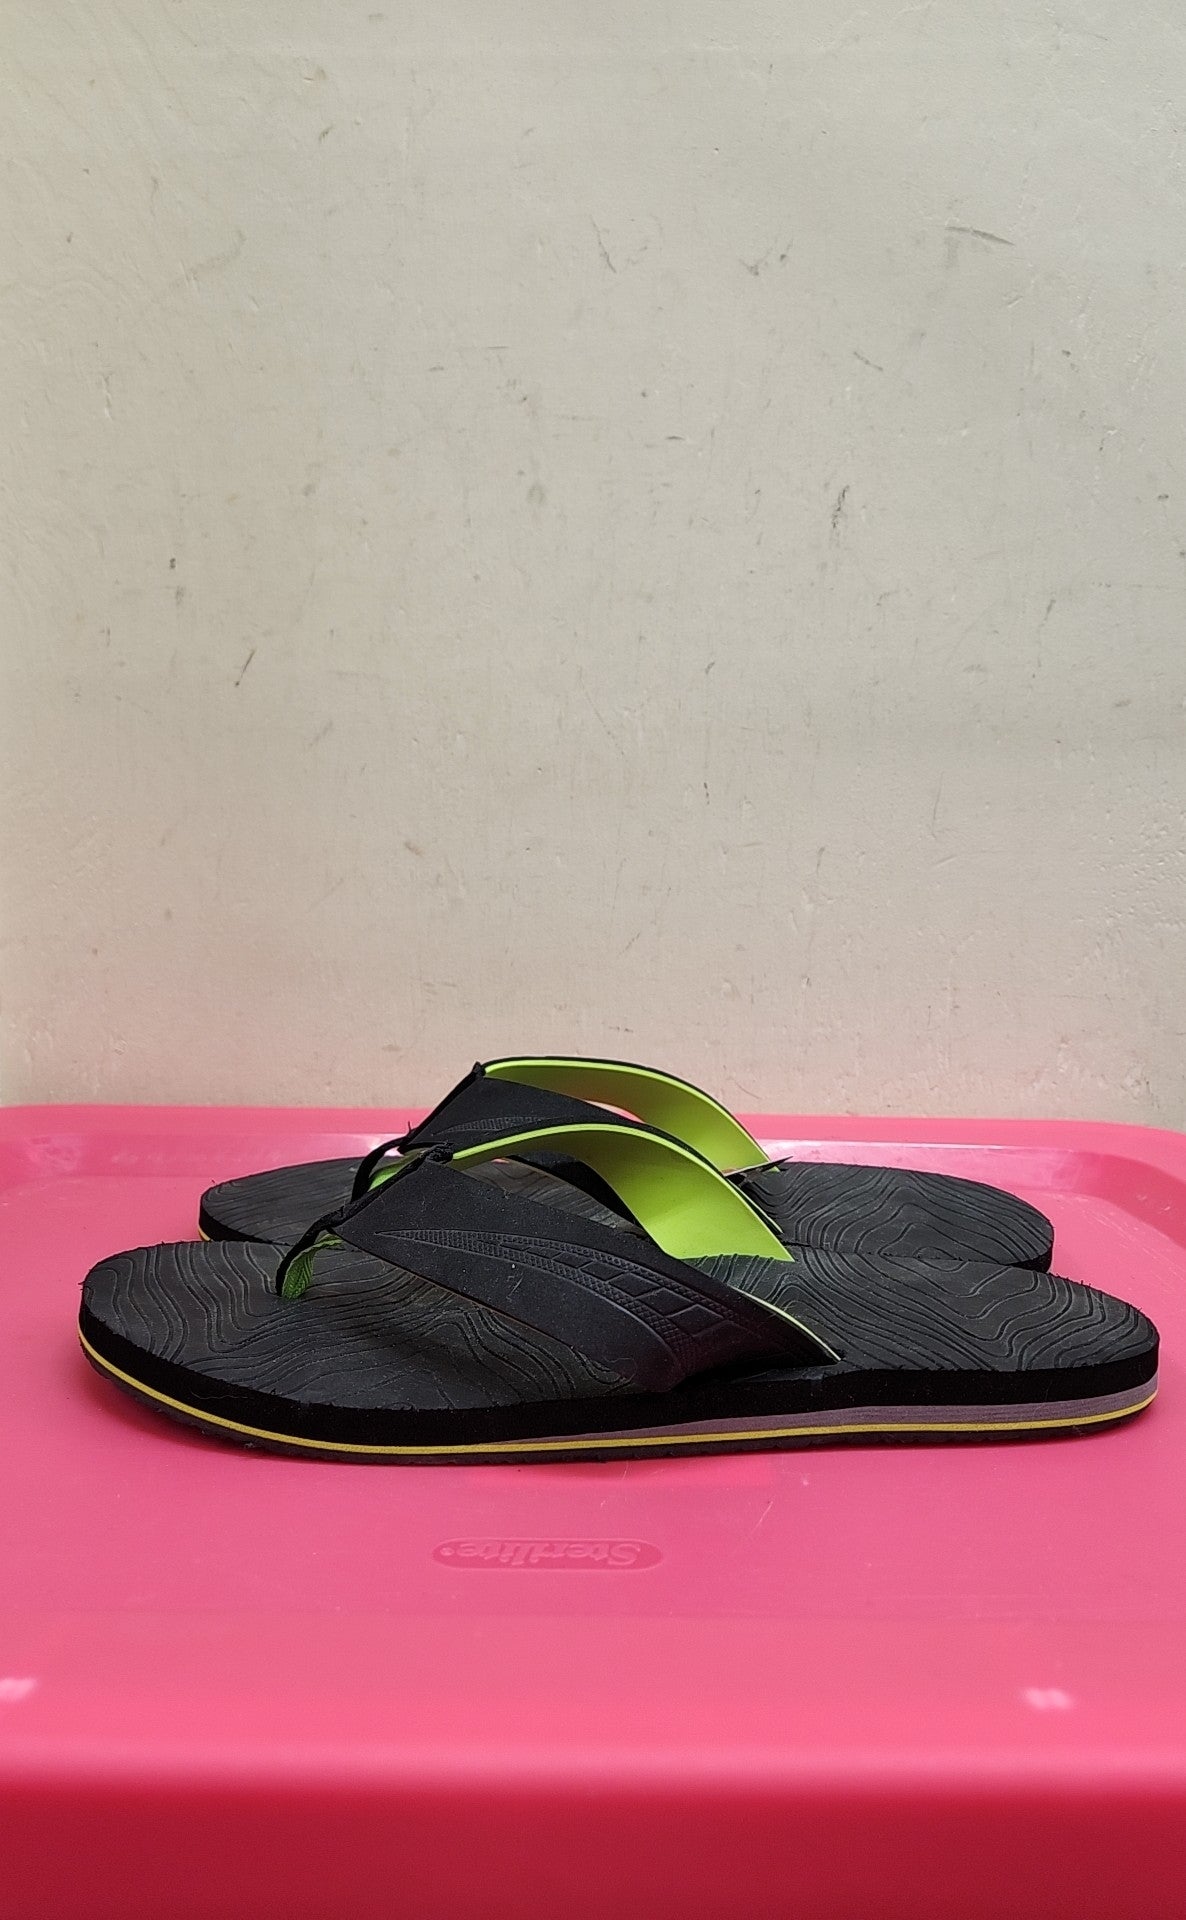 Mossimo Men's Size L Black Sandals